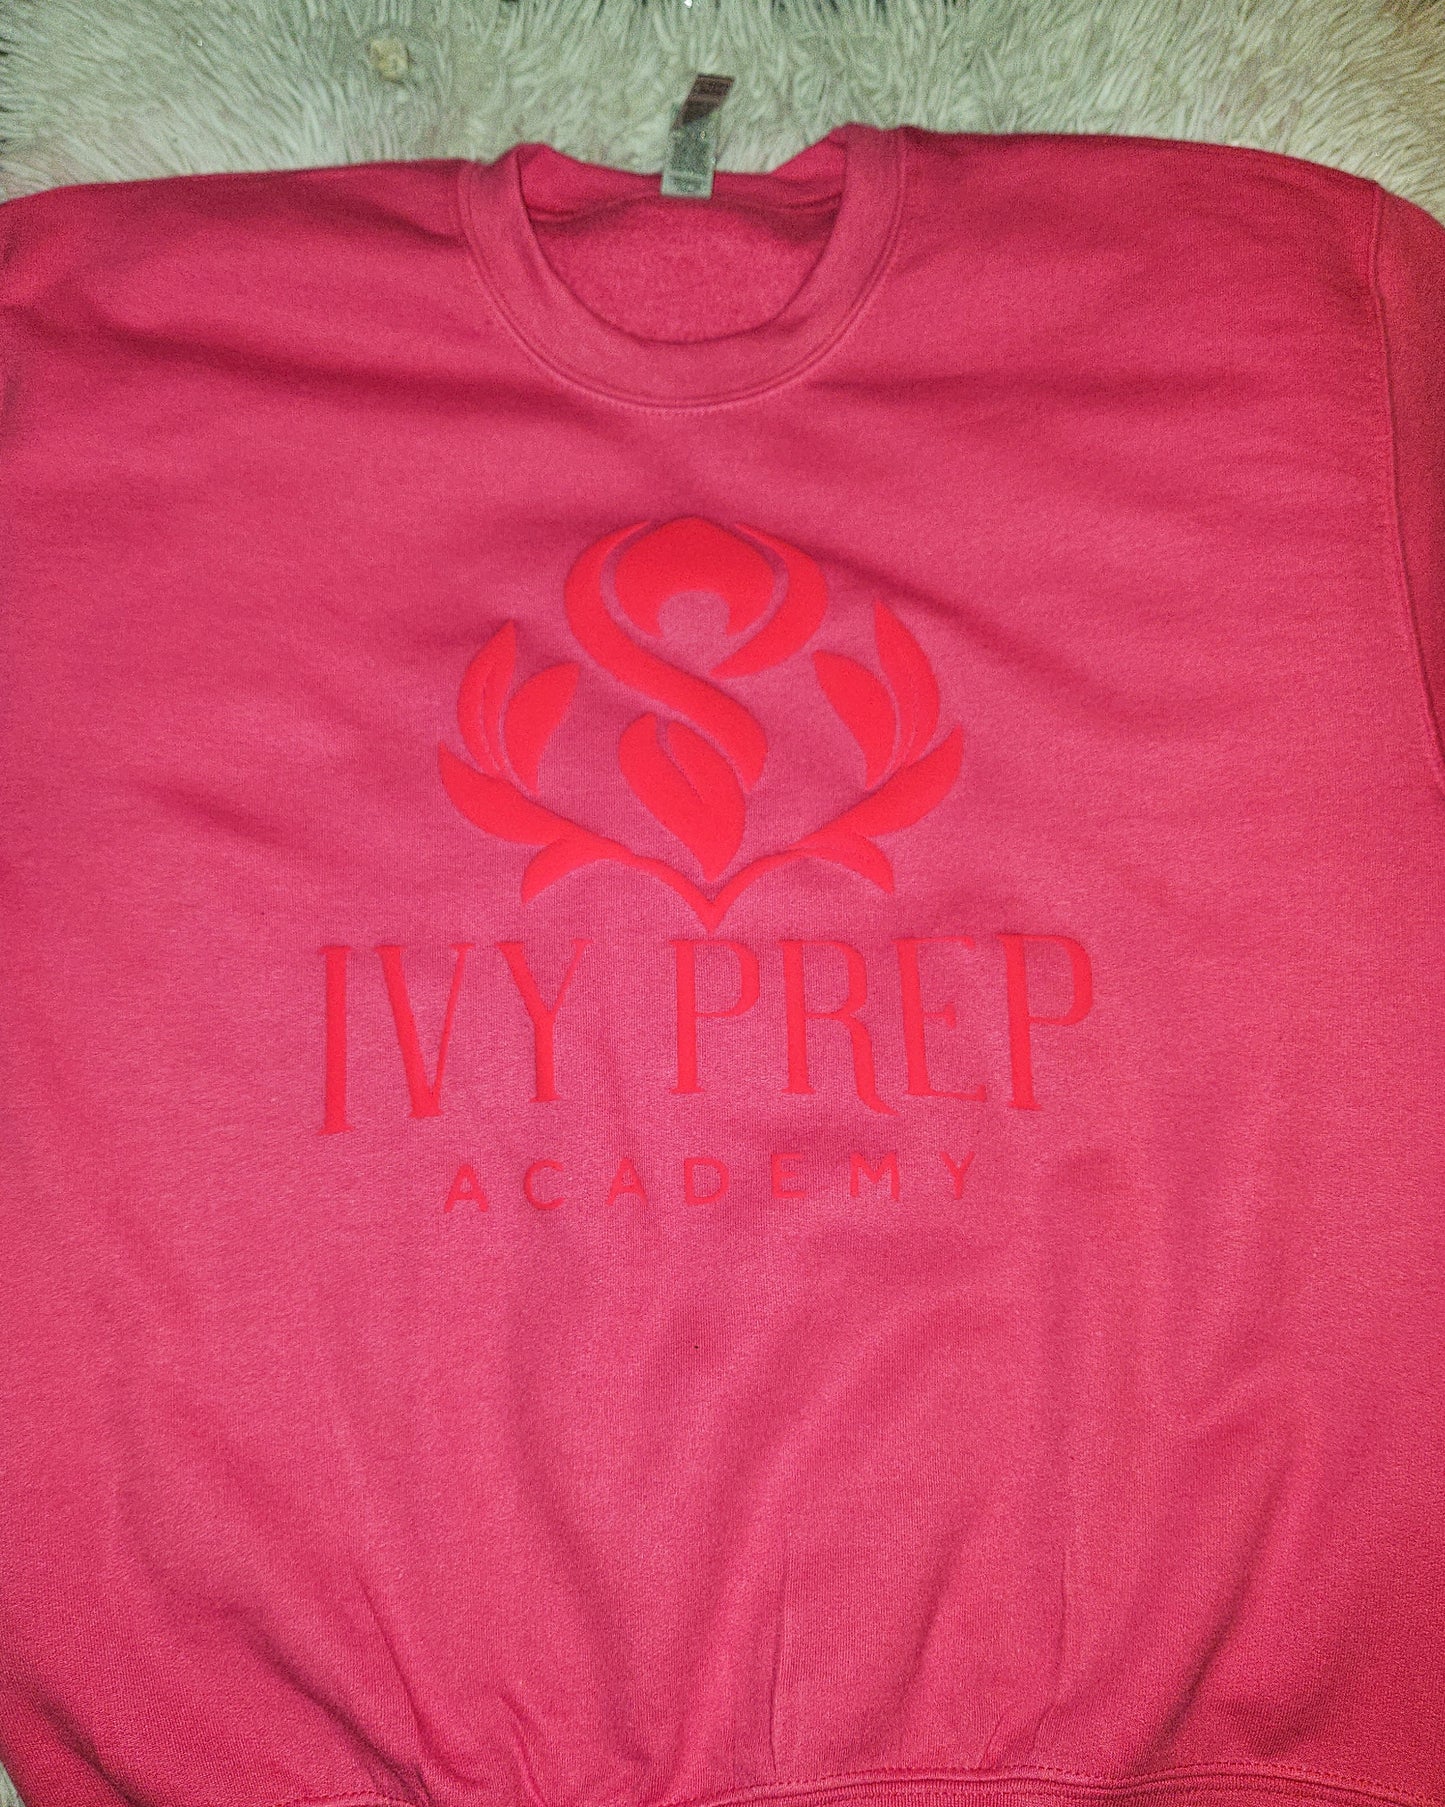 Ivy Prep Sweatshirts